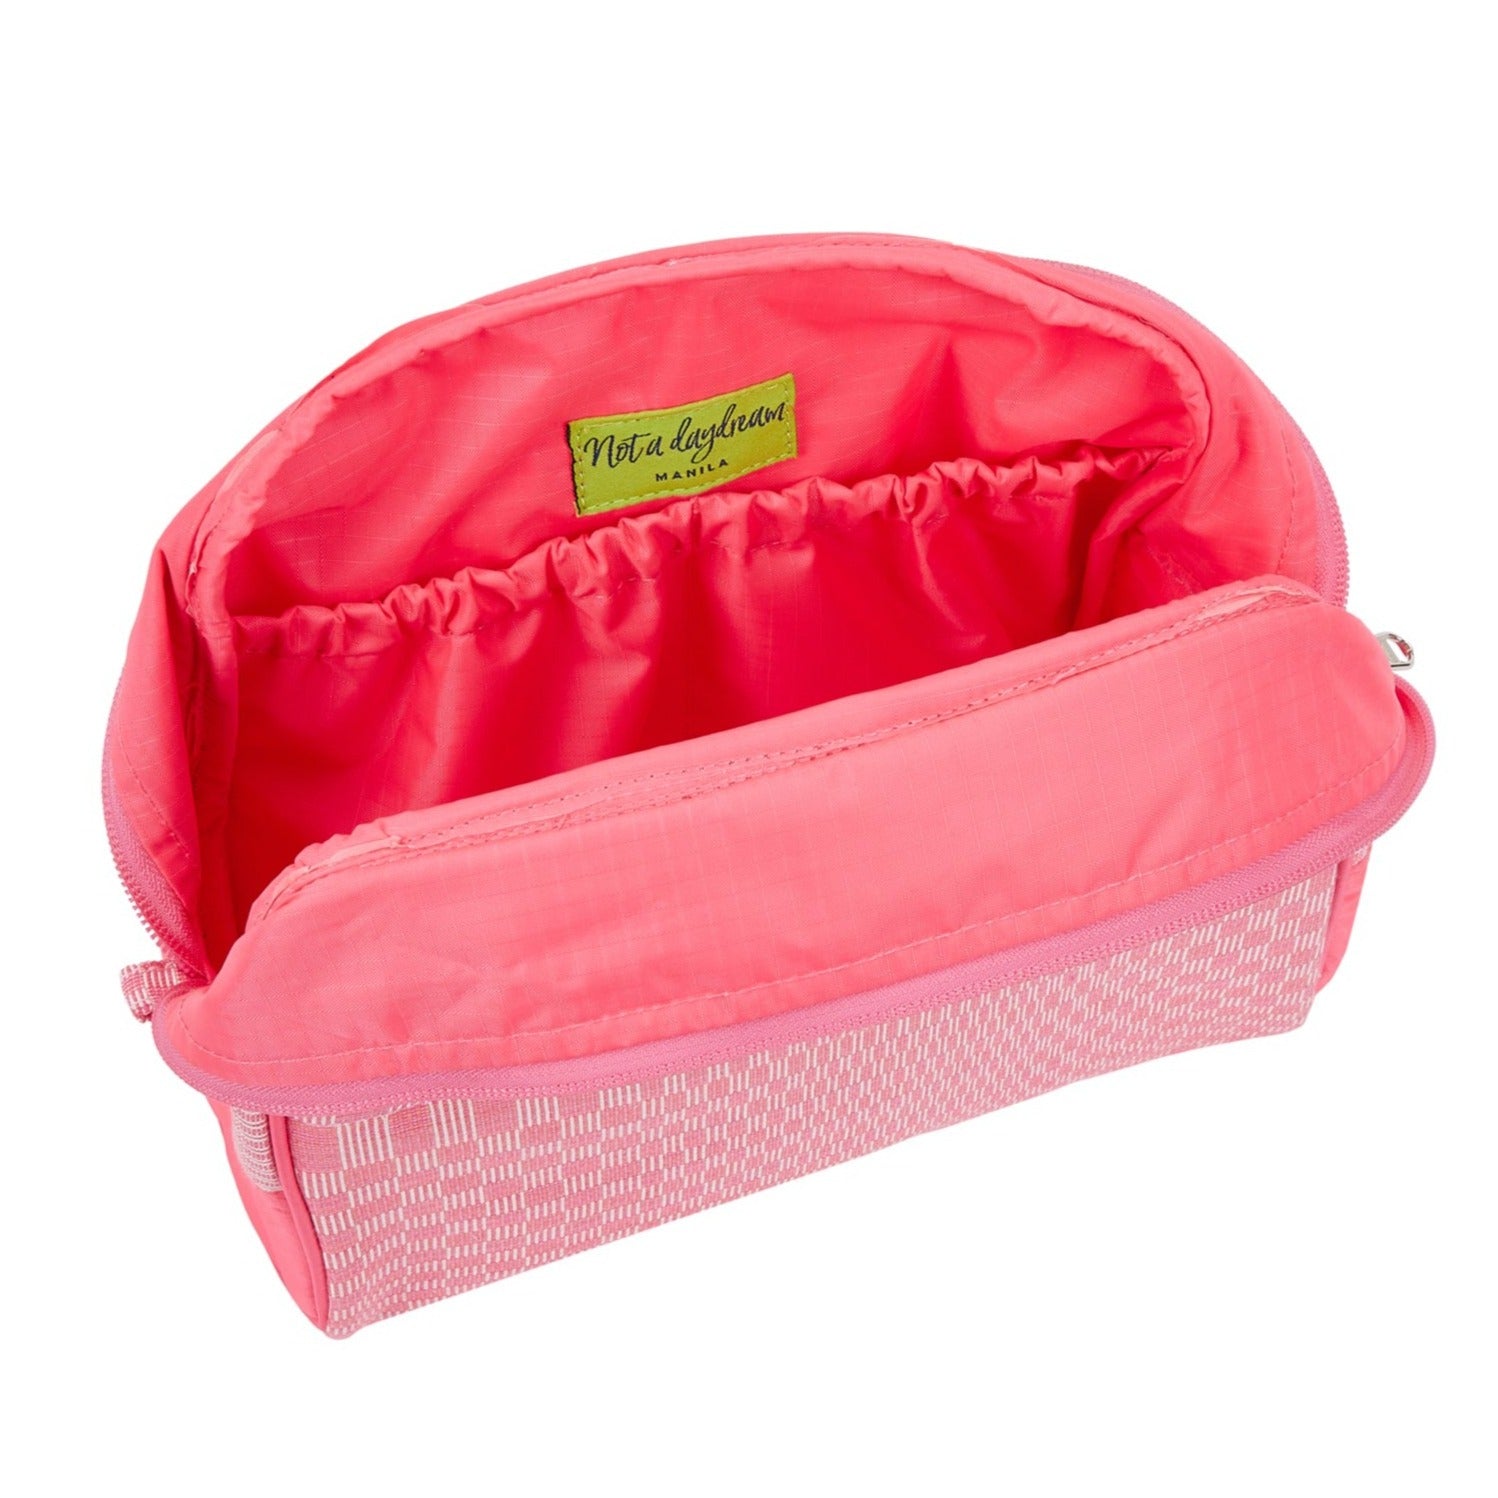 Neon Pink Binakol Travel Kit